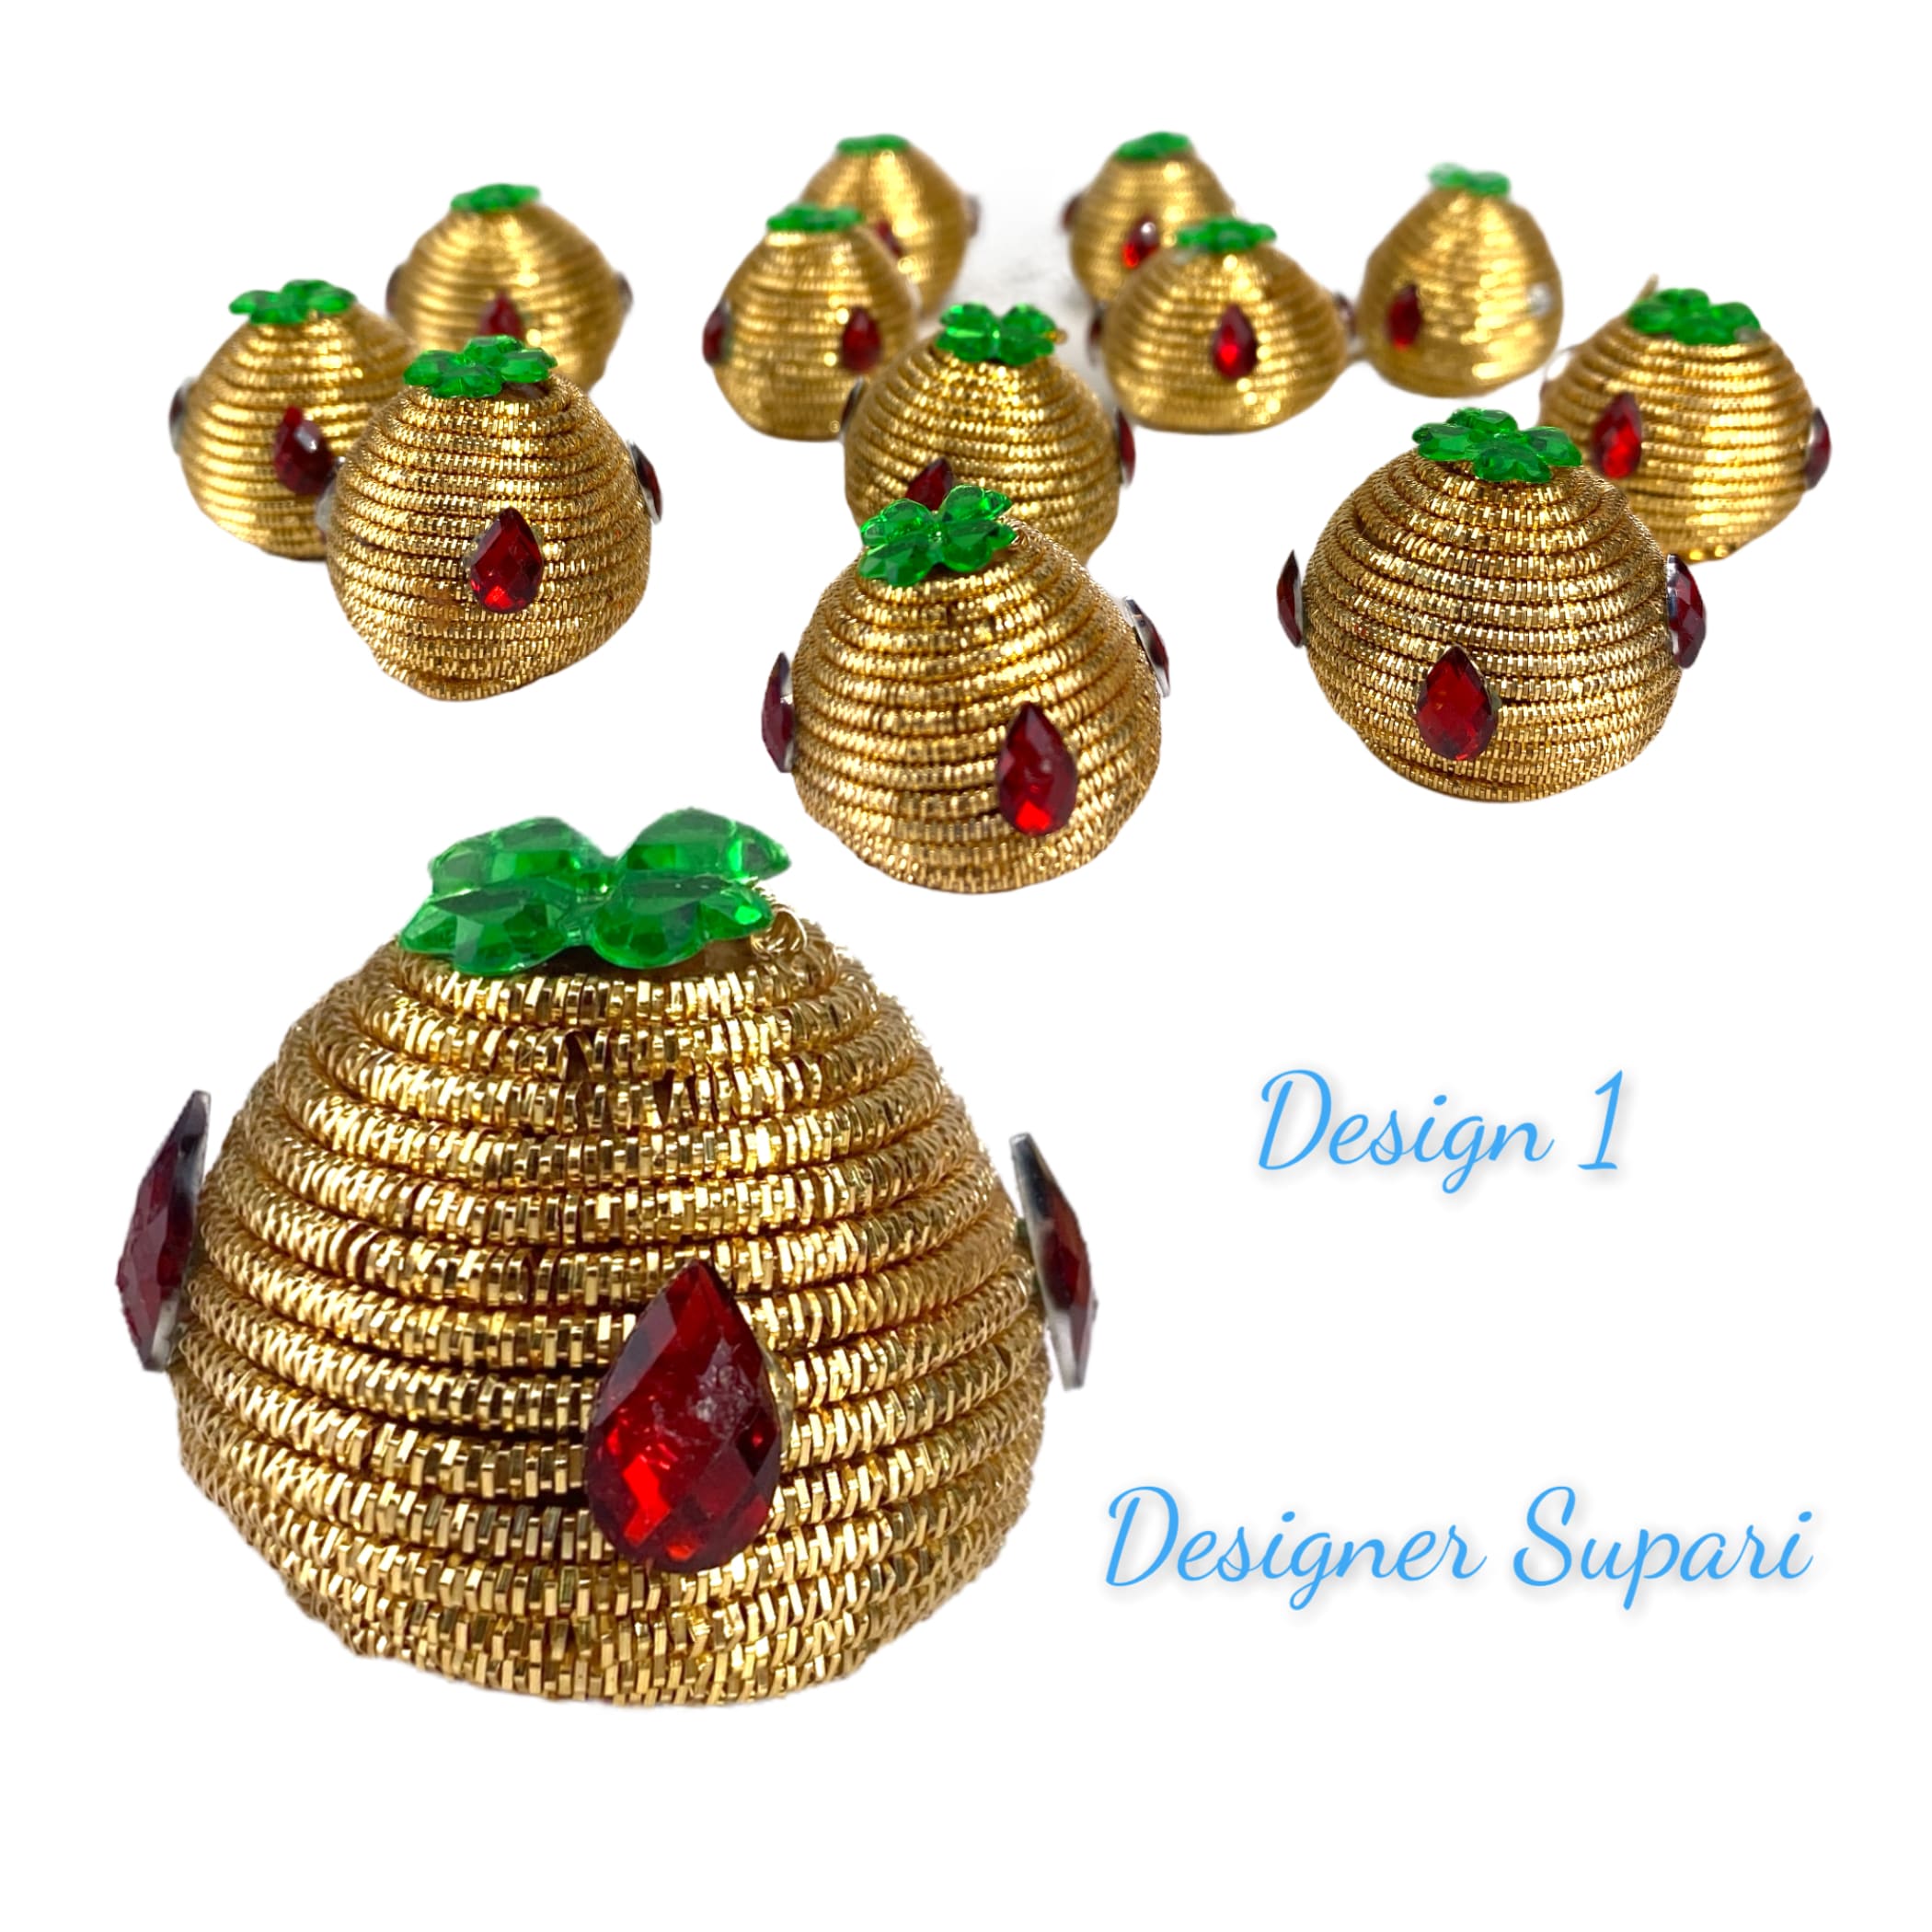 Designer supari betal nut for pooja decorative wedding hindu